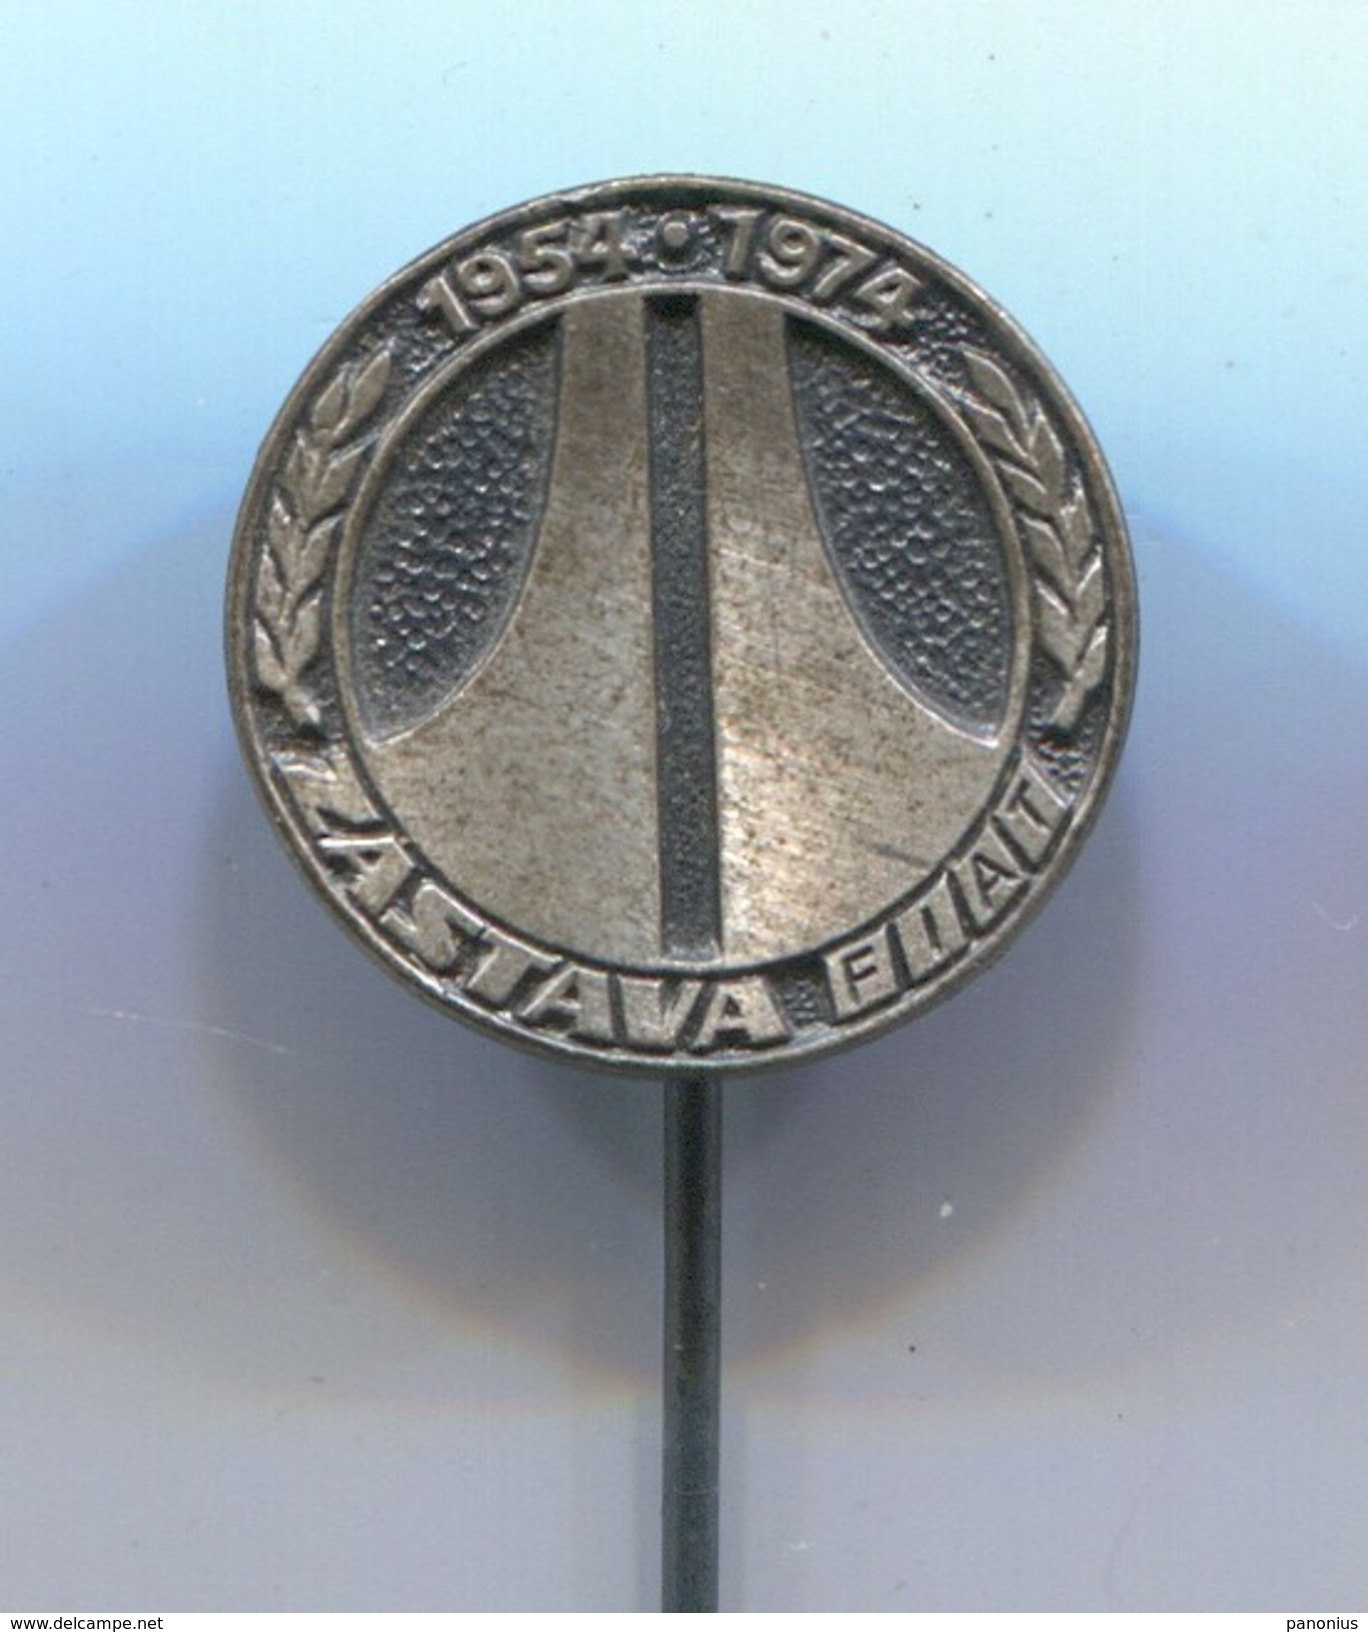 FIAT ZASTAVA - Car, Auto, Automotive, Vintage Pin, Badge, Abzeichen - Fiat